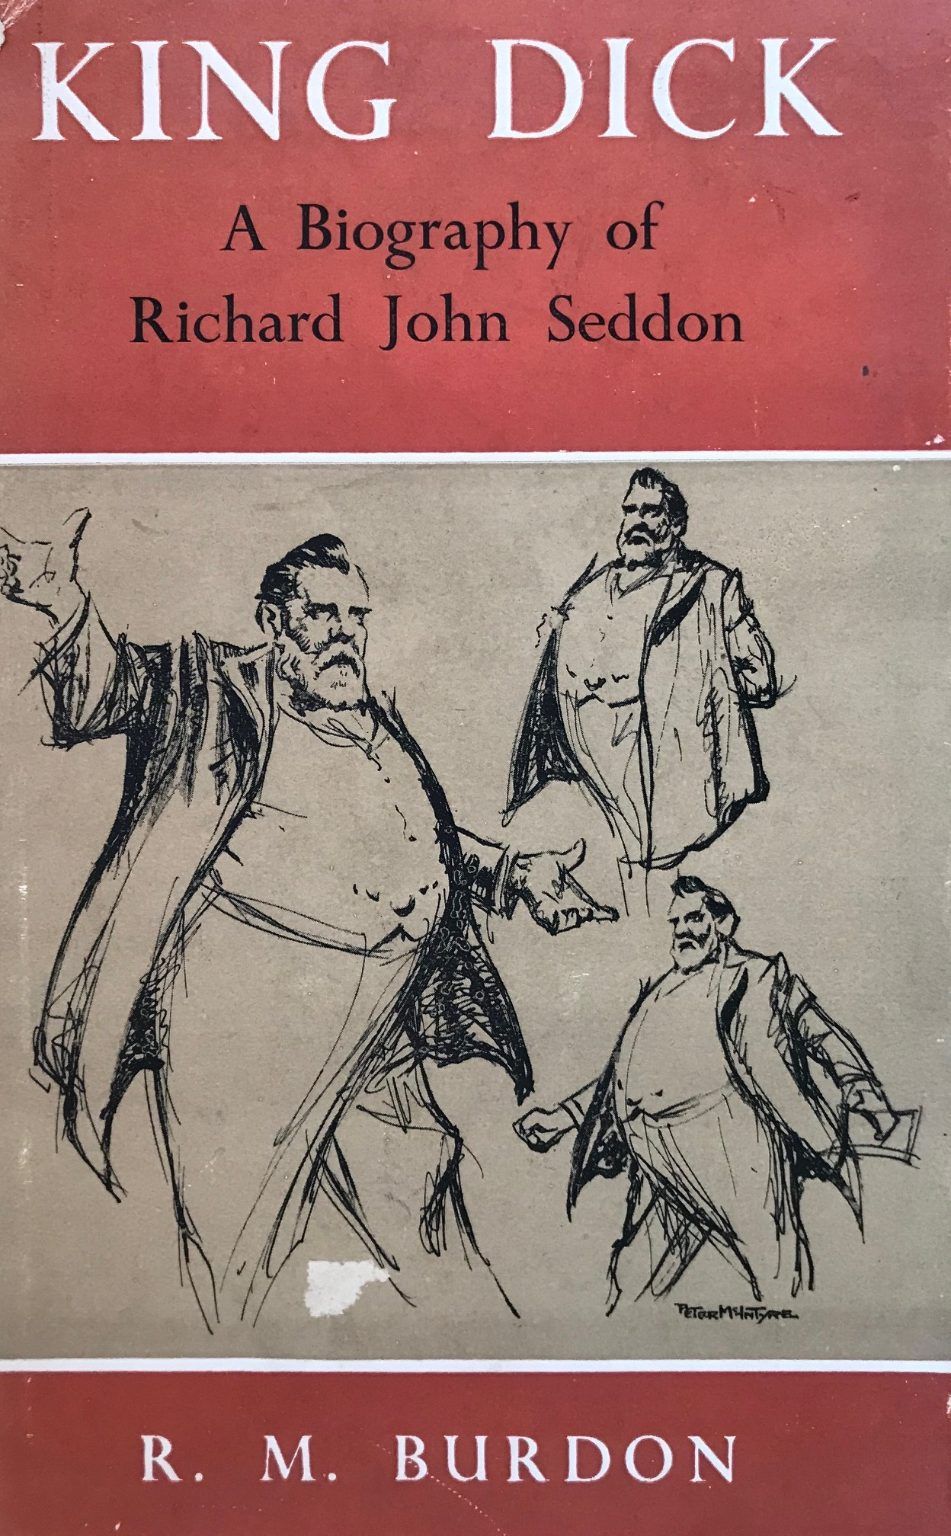 KING DICK: A Biography of Richard John Seddon